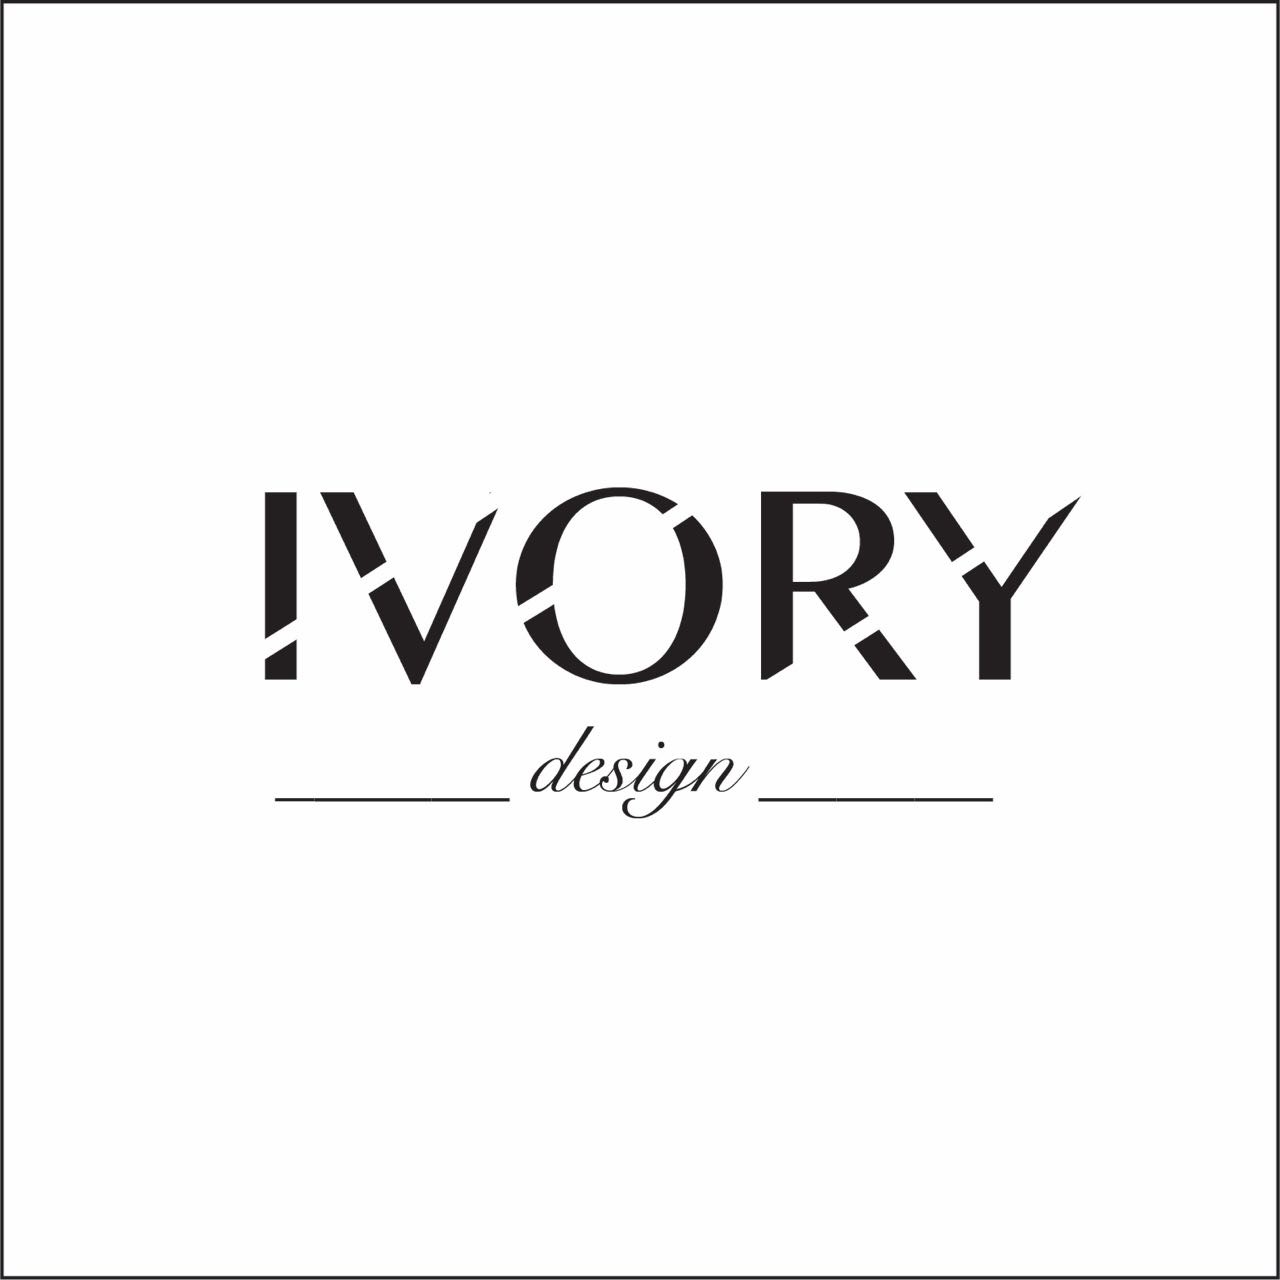 Ivory Design